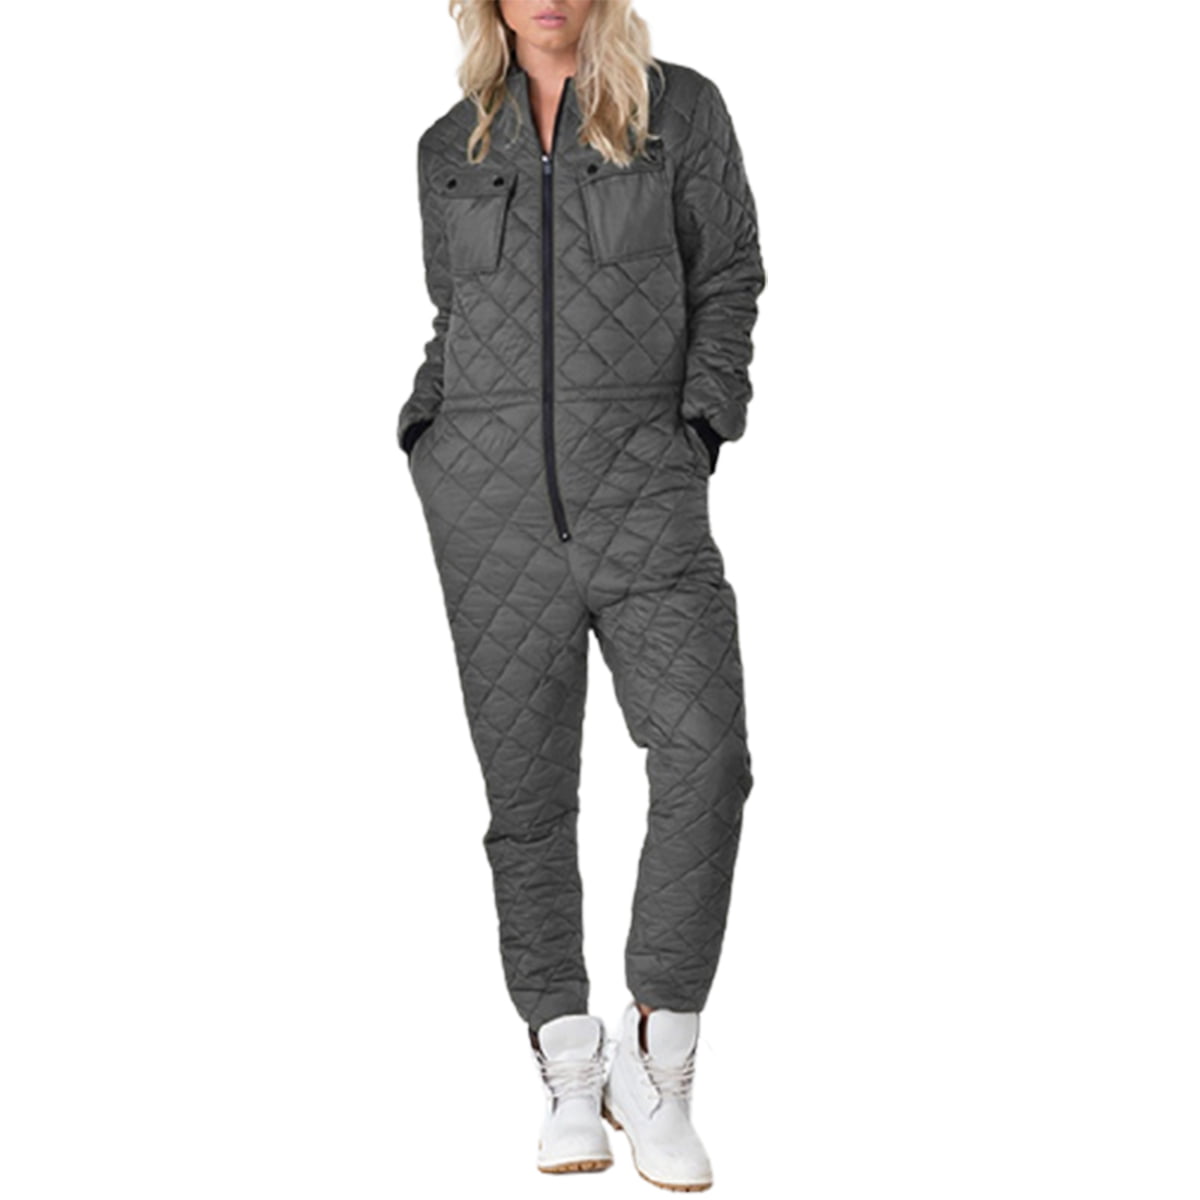 Winter Warm Padded Ski Suit Jumpsuit - Walmart.com